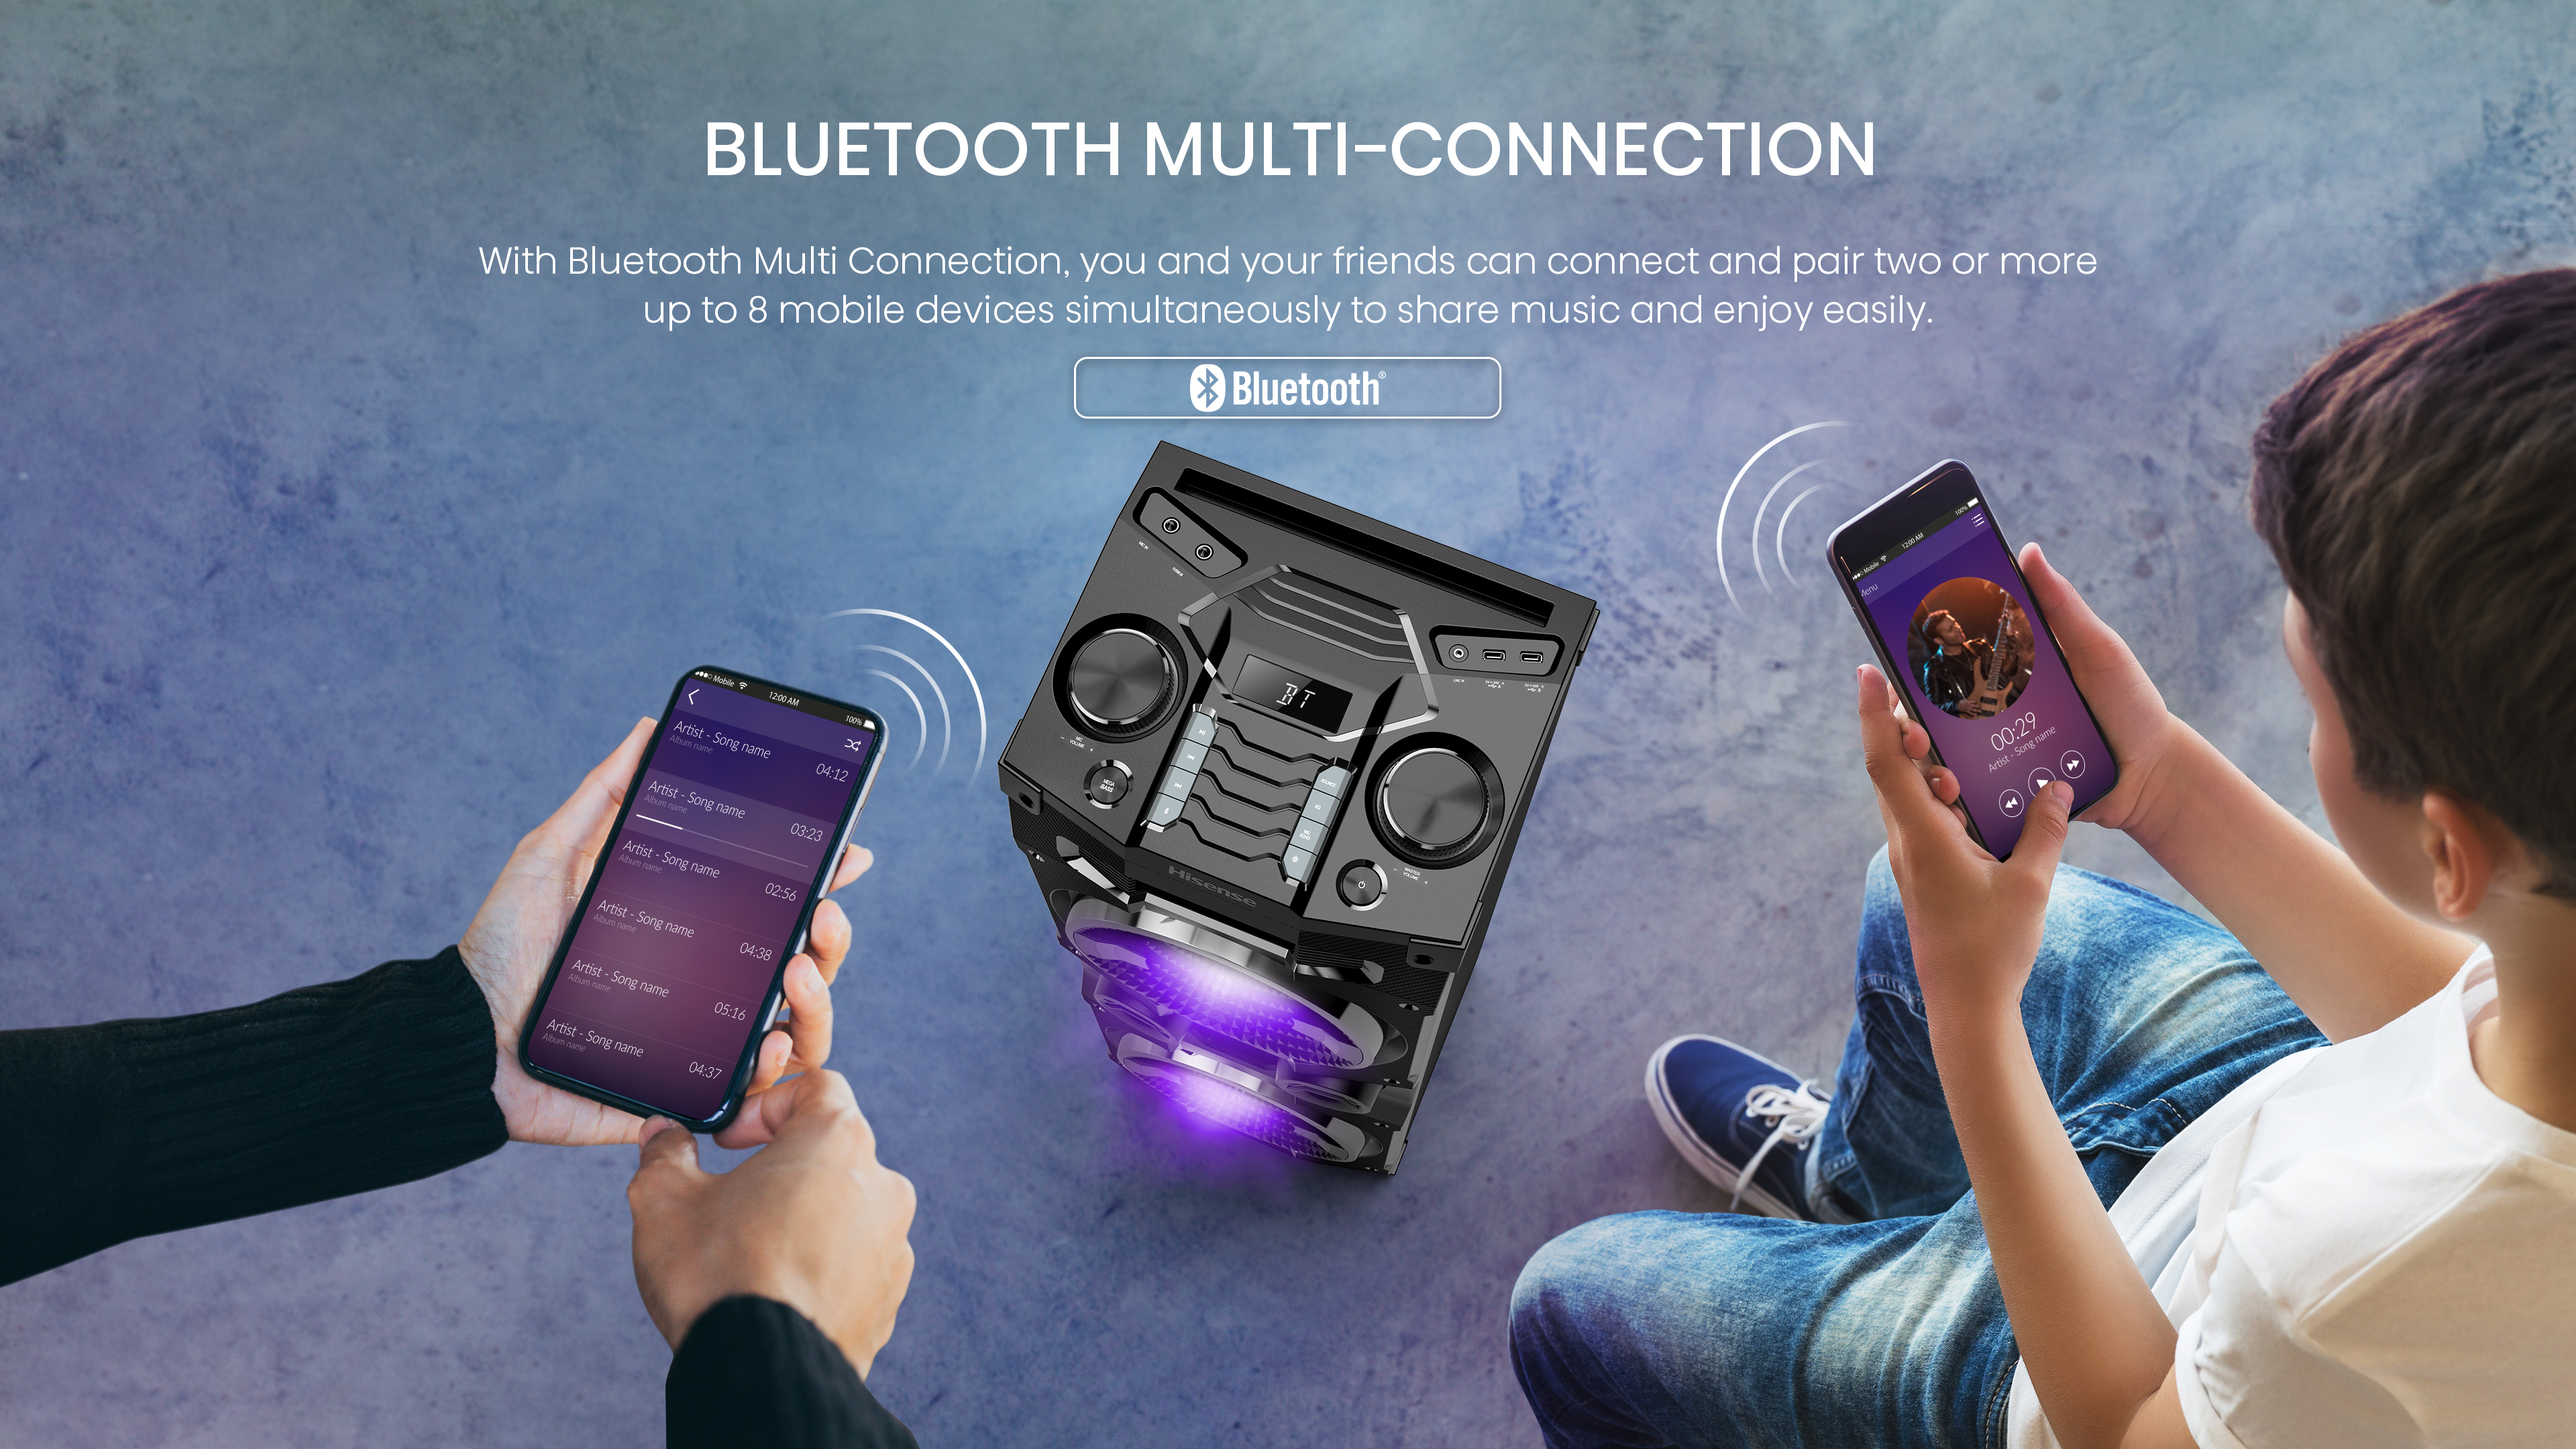 8.Bluetooth Multi